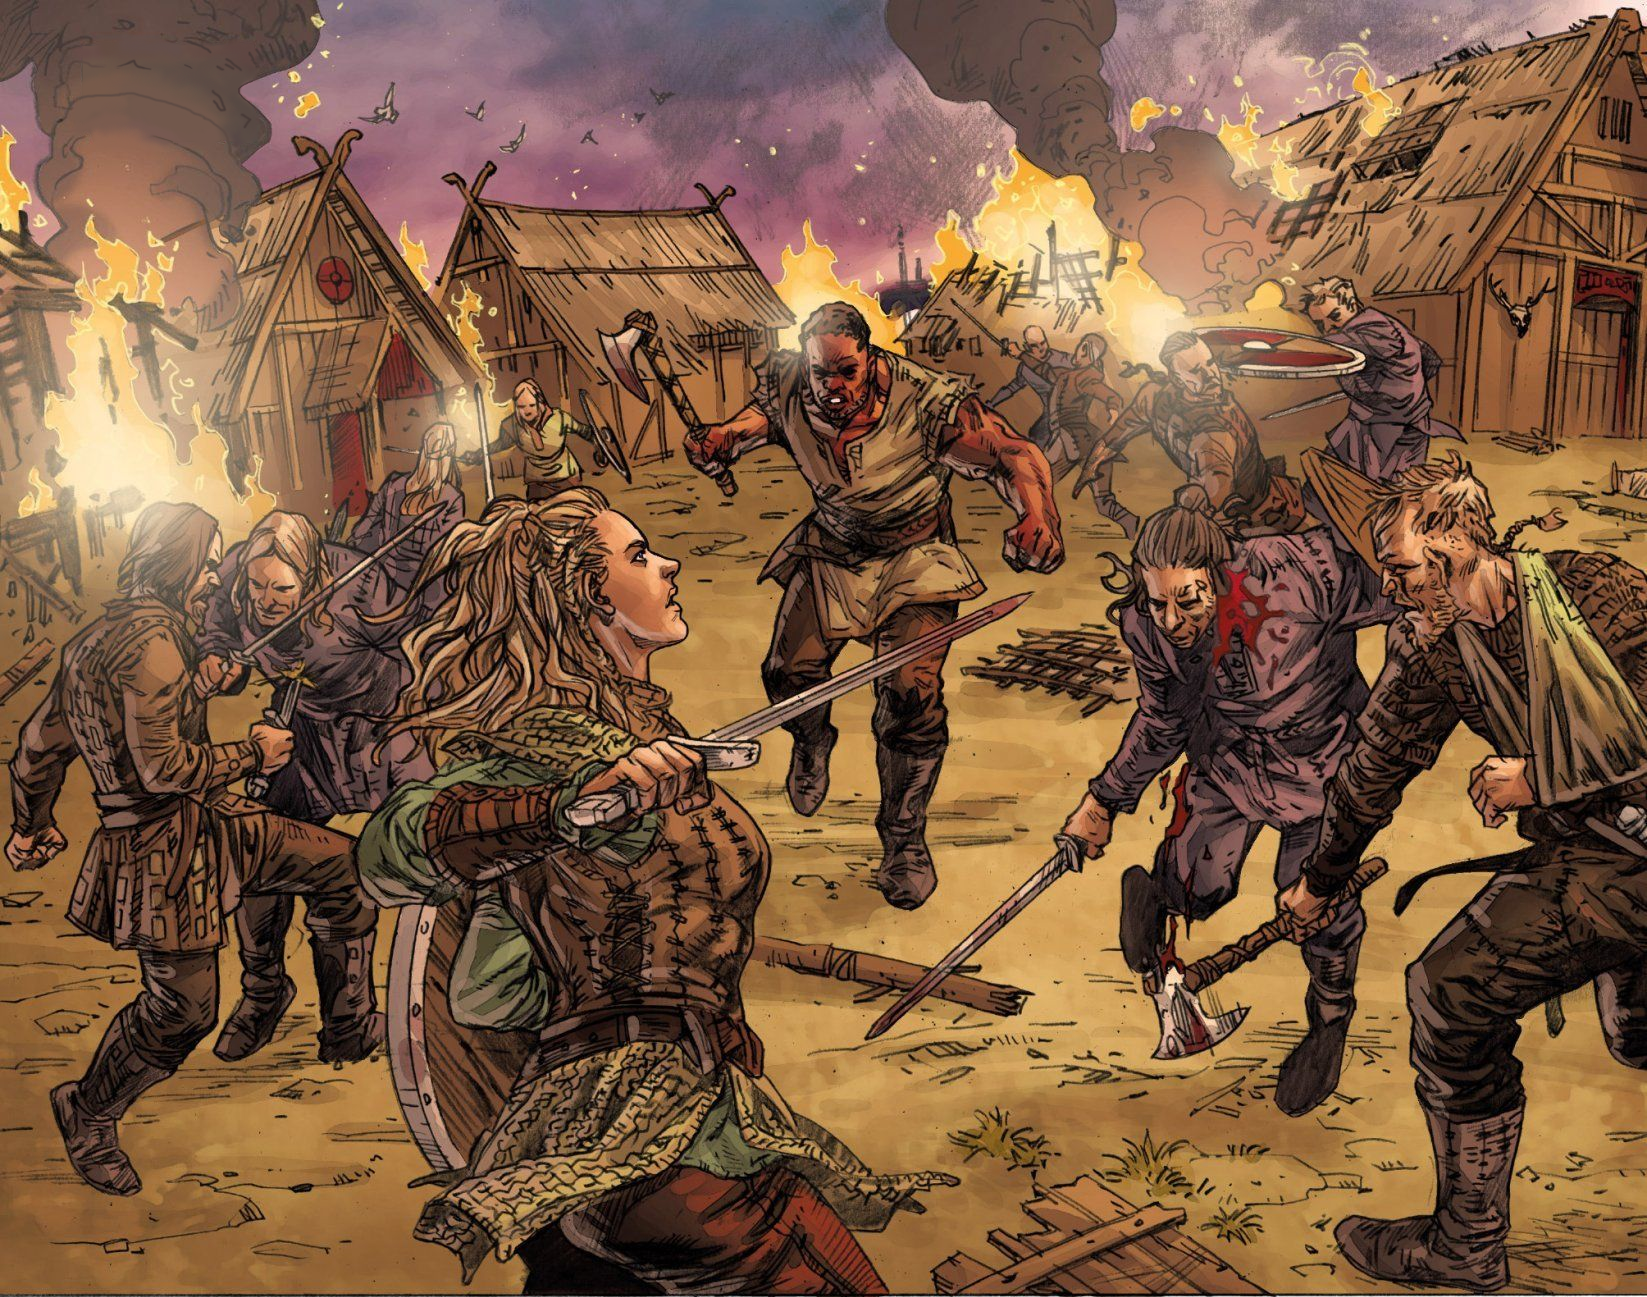 Valhalla набег. Ютландия Викинги. Скандинавия Викинги штурмуют. Викинги атакуют. Средневековье арт.